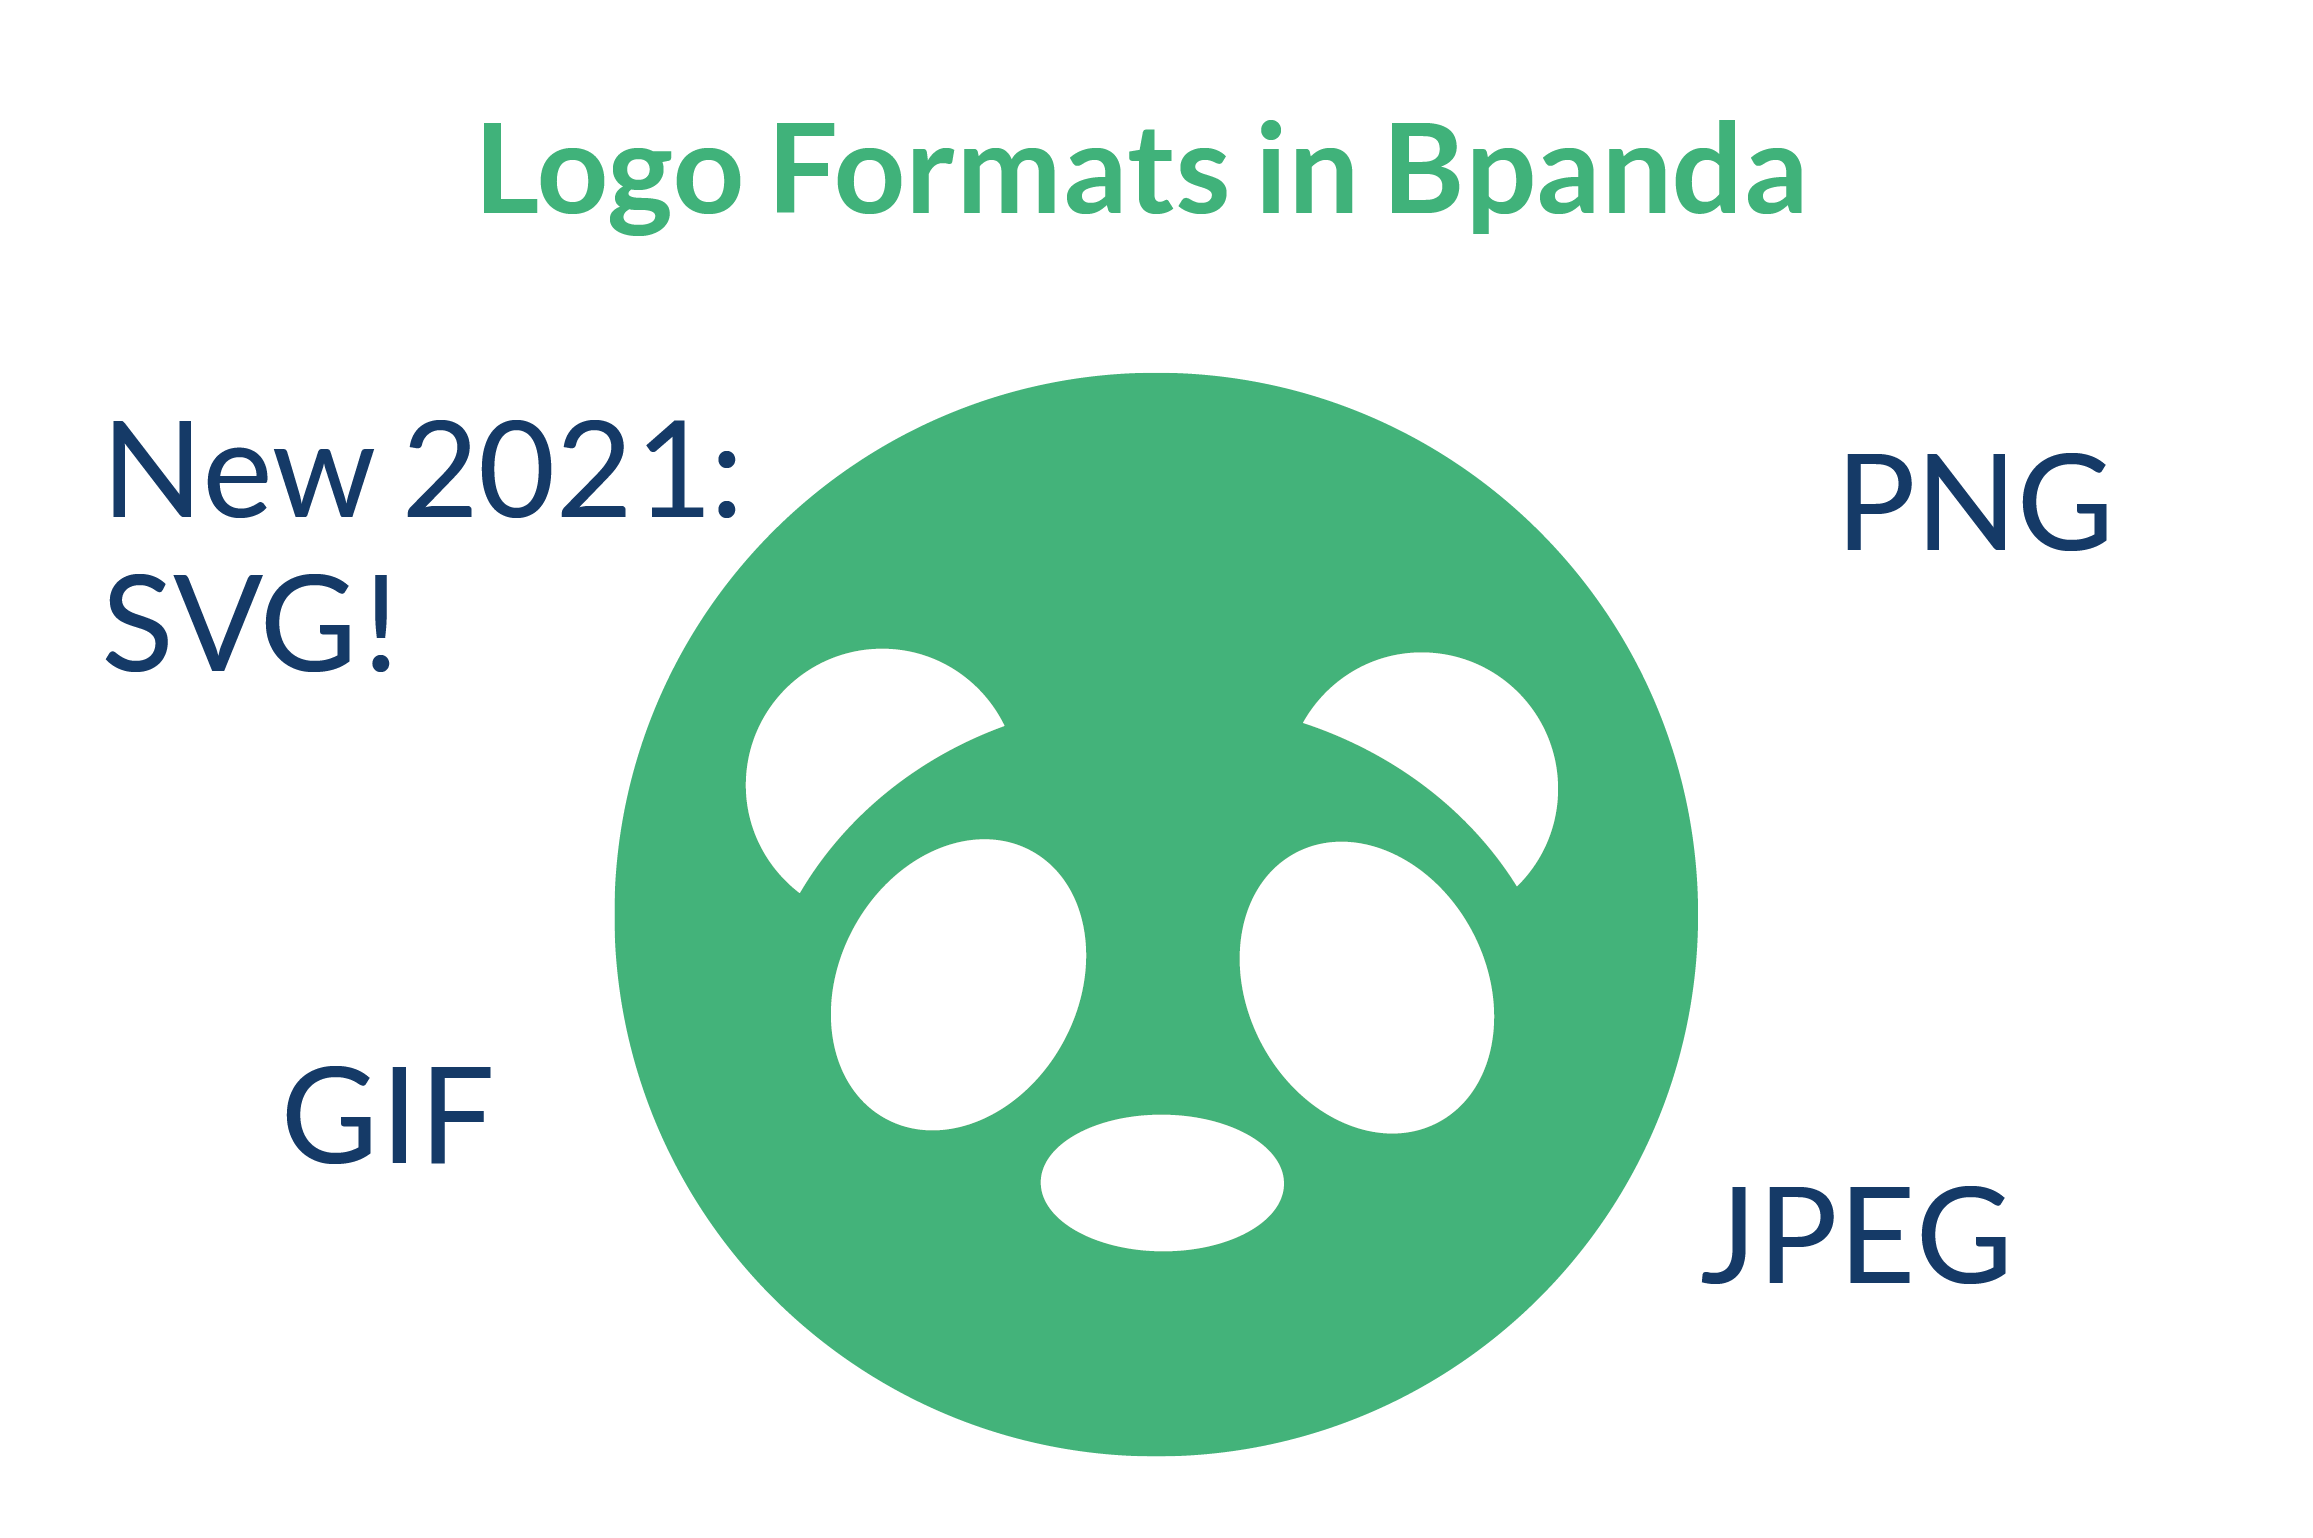 General UX Improvements and Increased Performance for Bpanda